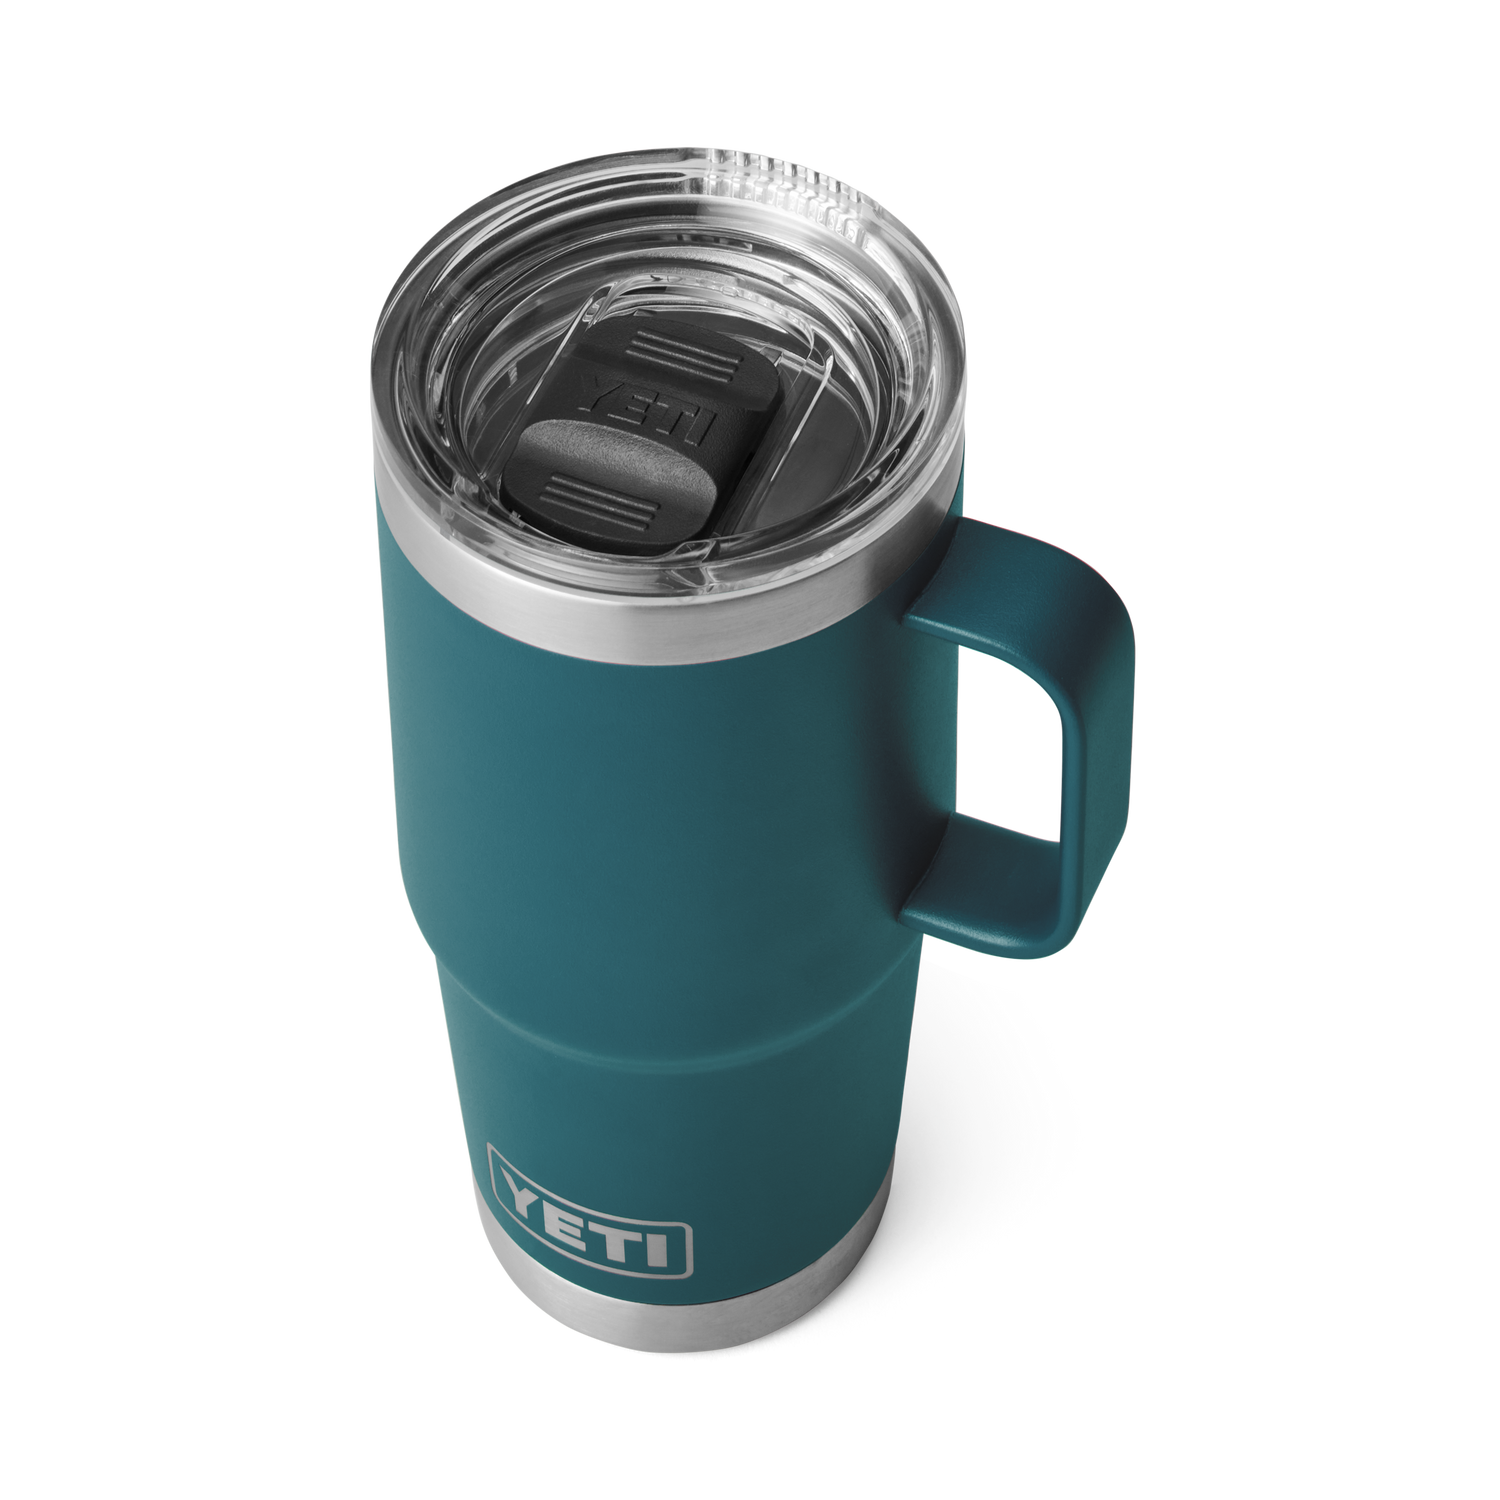 YETI Rambler® 20 oz (591 ml) Travel Mug Agave Teal